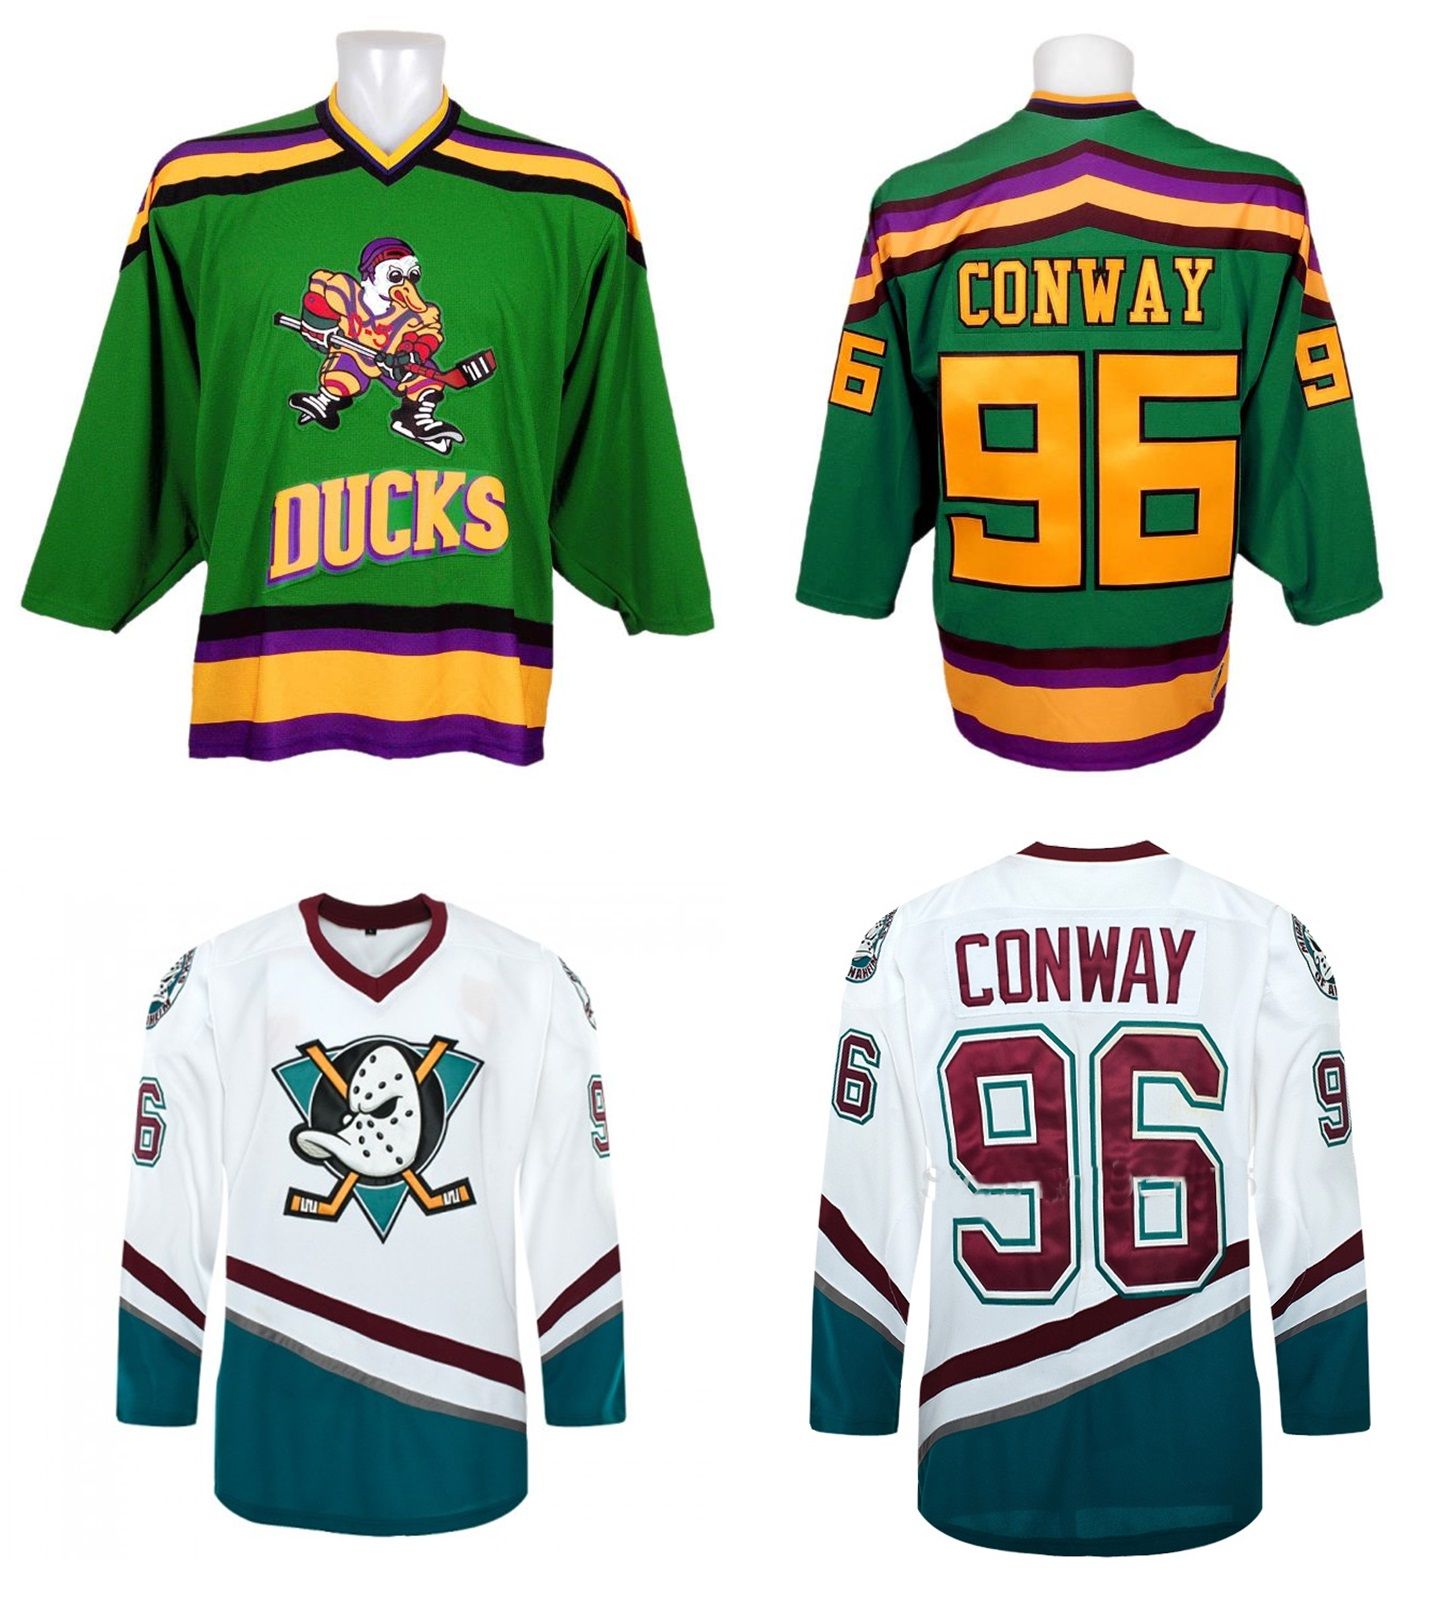 ducks jersey 2016